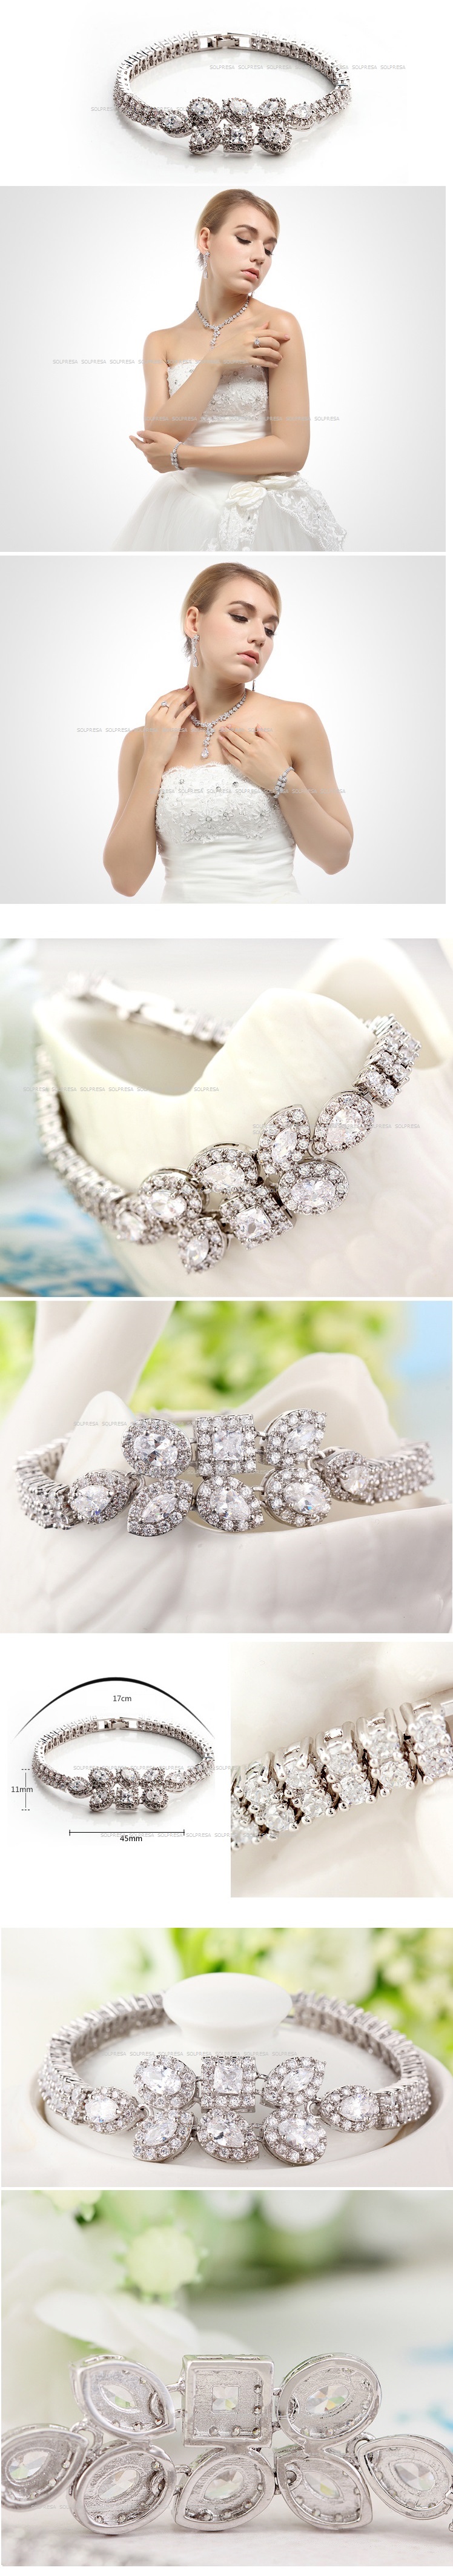 Solpresa True Love Zirconium Diamond Bracelet